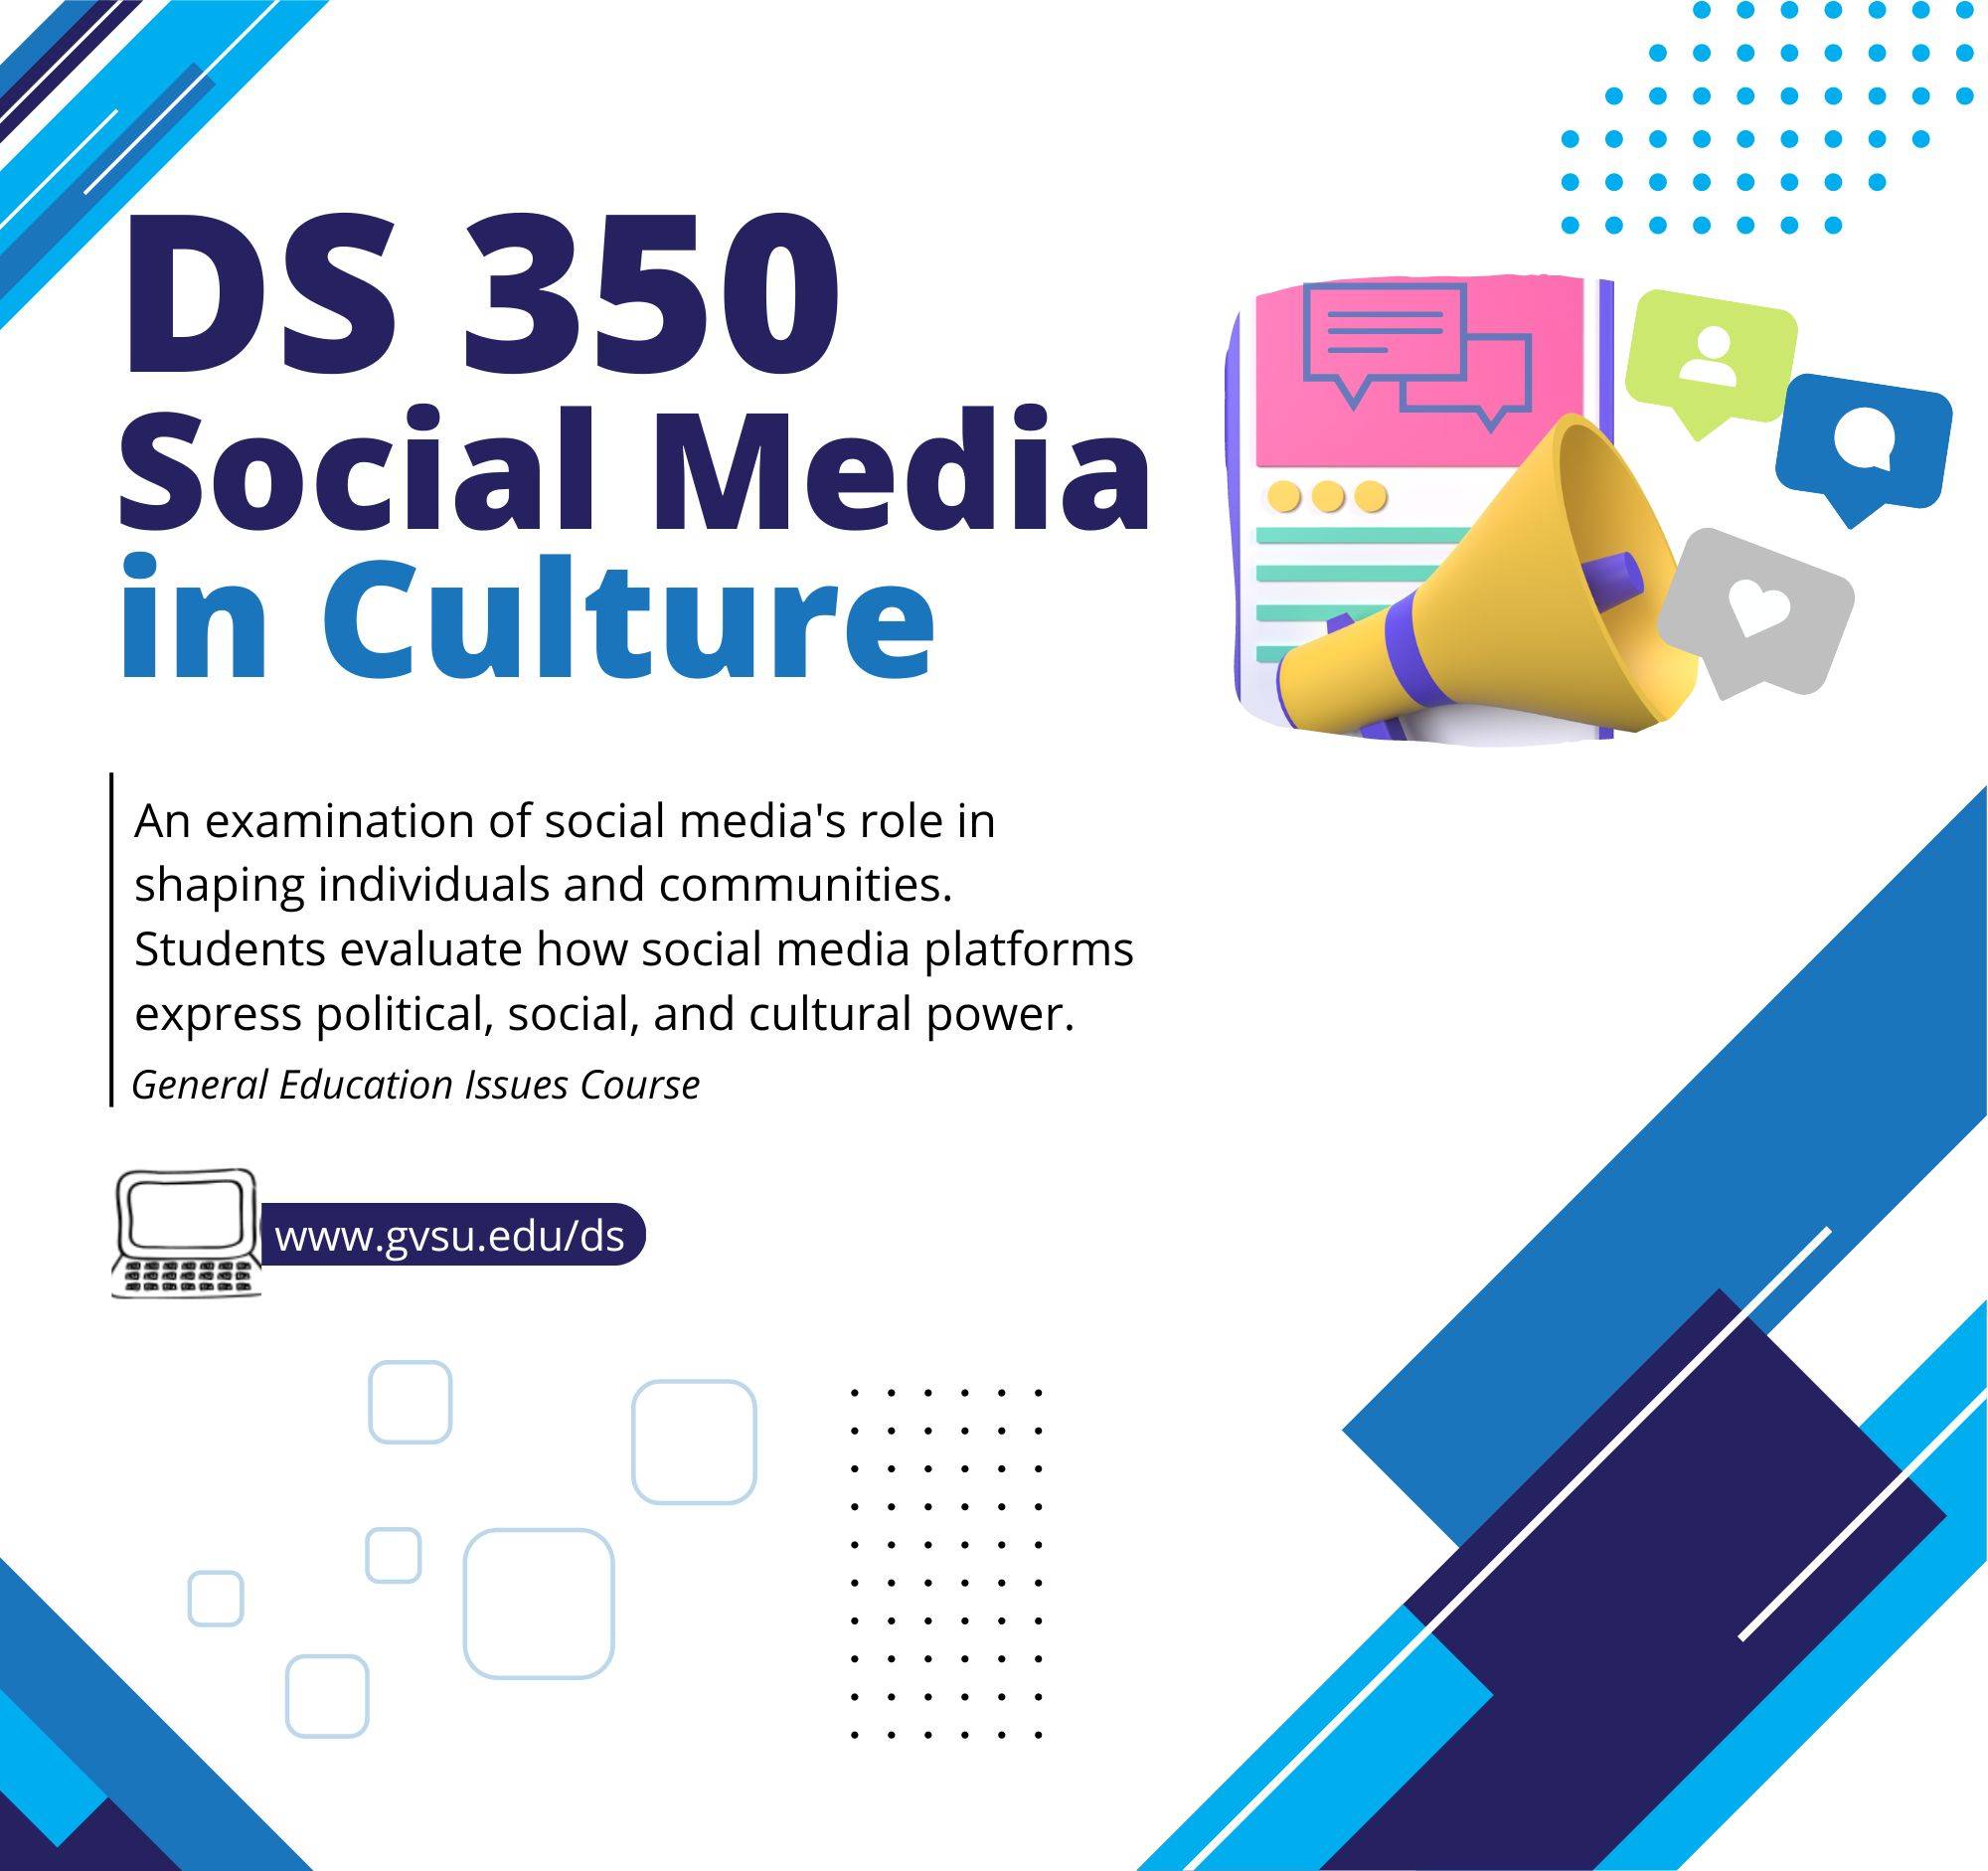 Promotional flier for DS 350, Social Media in Culture